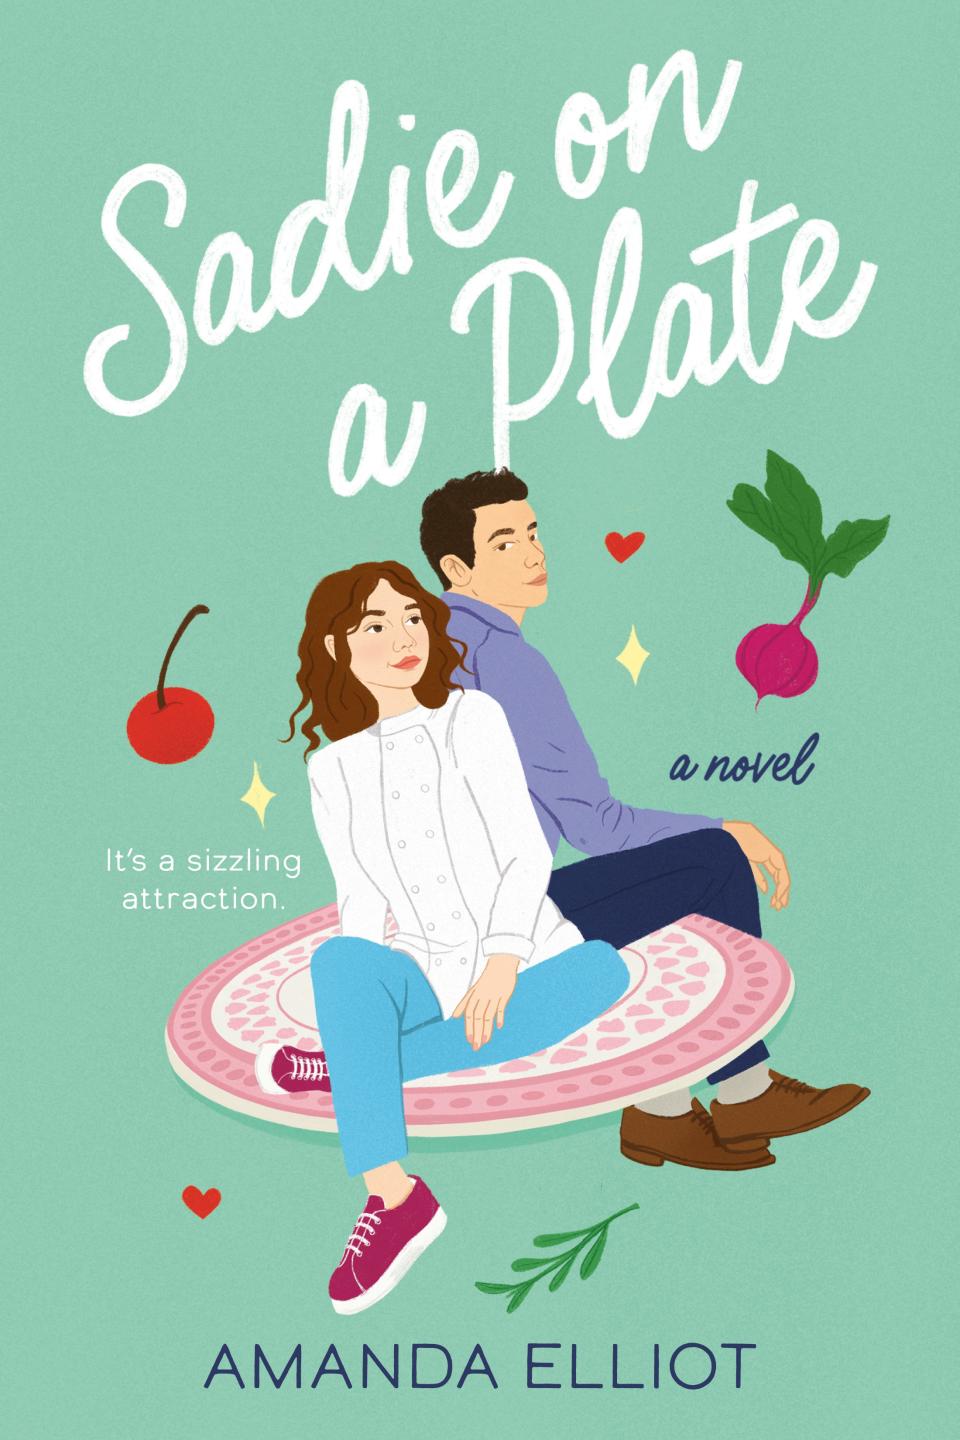 "Sadie on a Plate," by Amanda Elliot